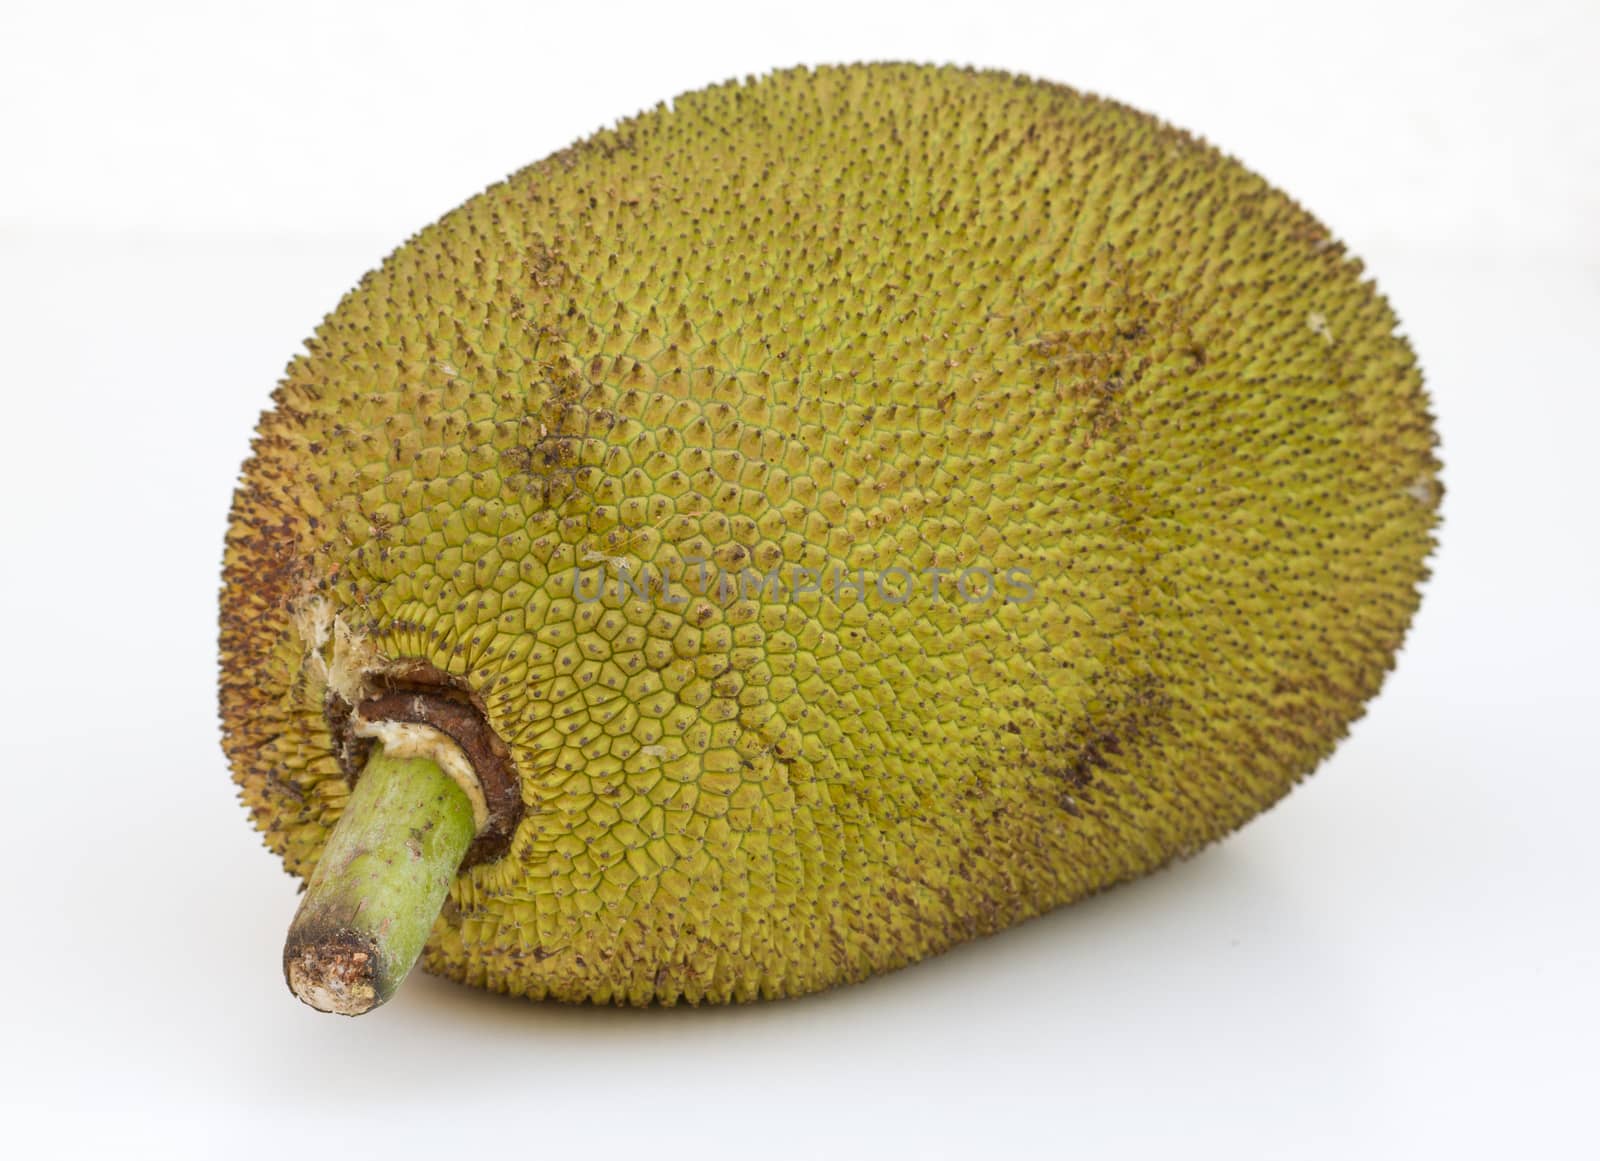 Large ripe jackfruit. India Goa. by mcherevan